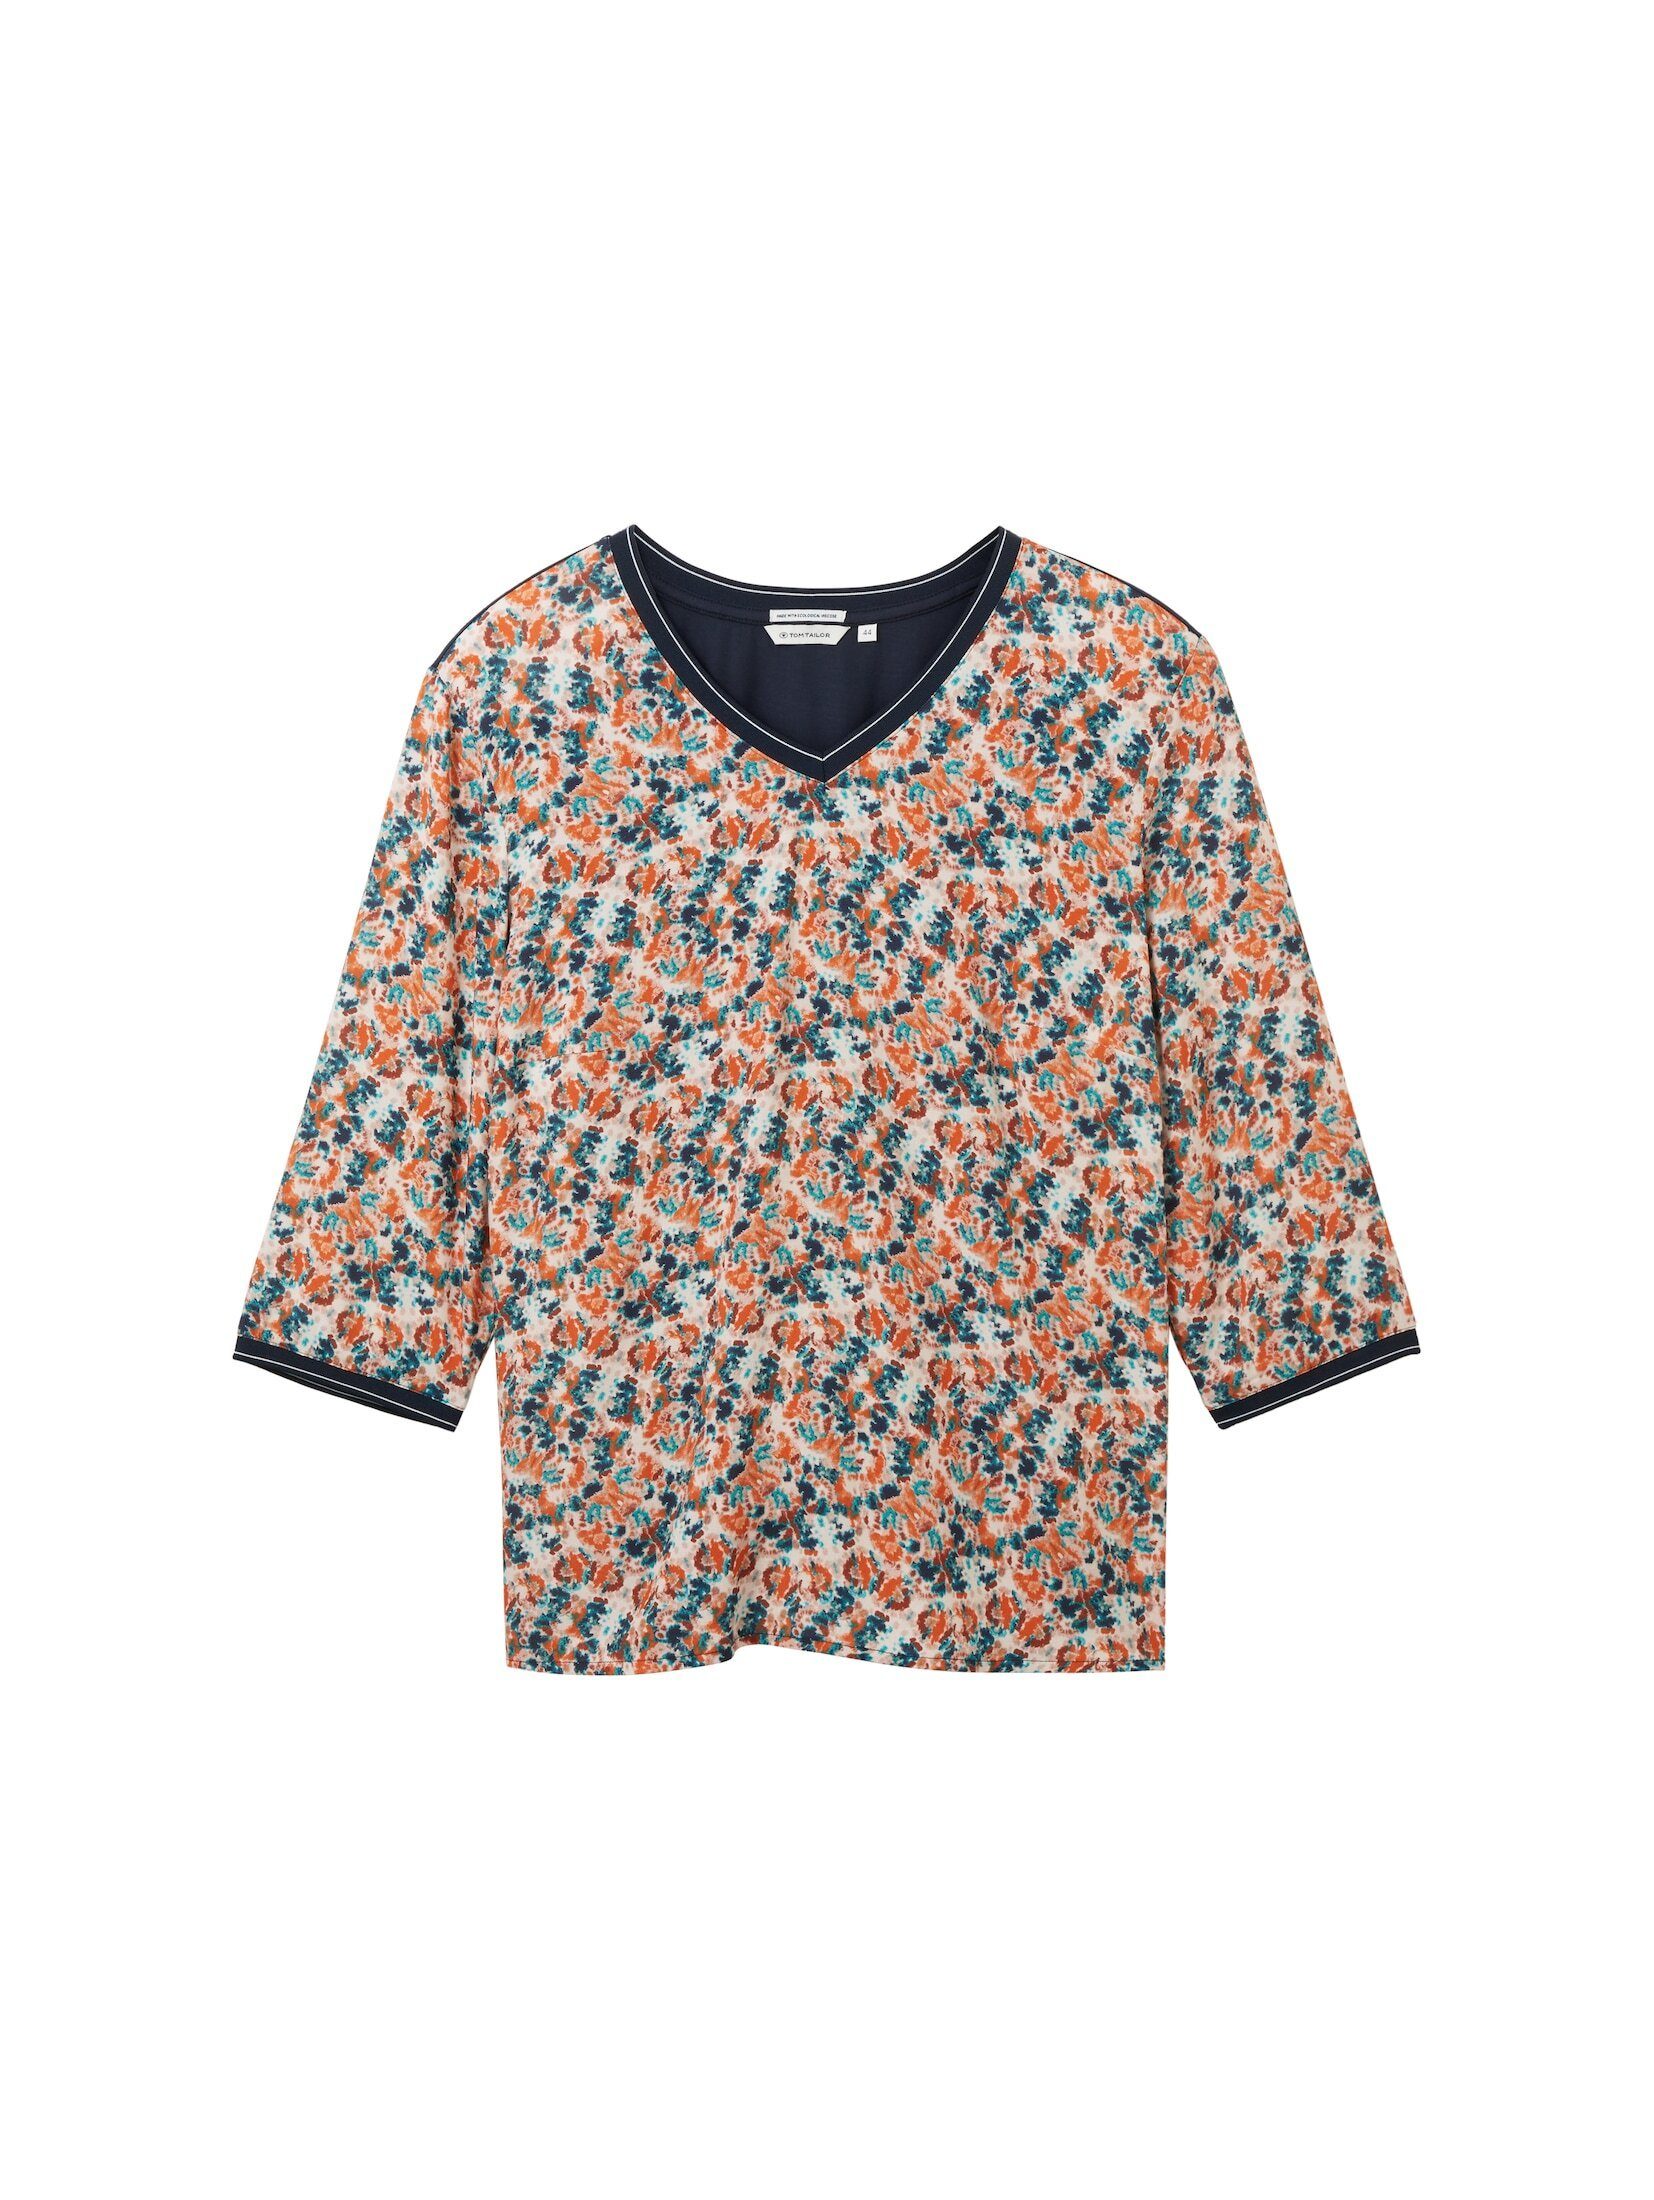 PLUS dye Shirt TAILOR Gemustertes tie TOM floral grey T-Shirt small - Plus